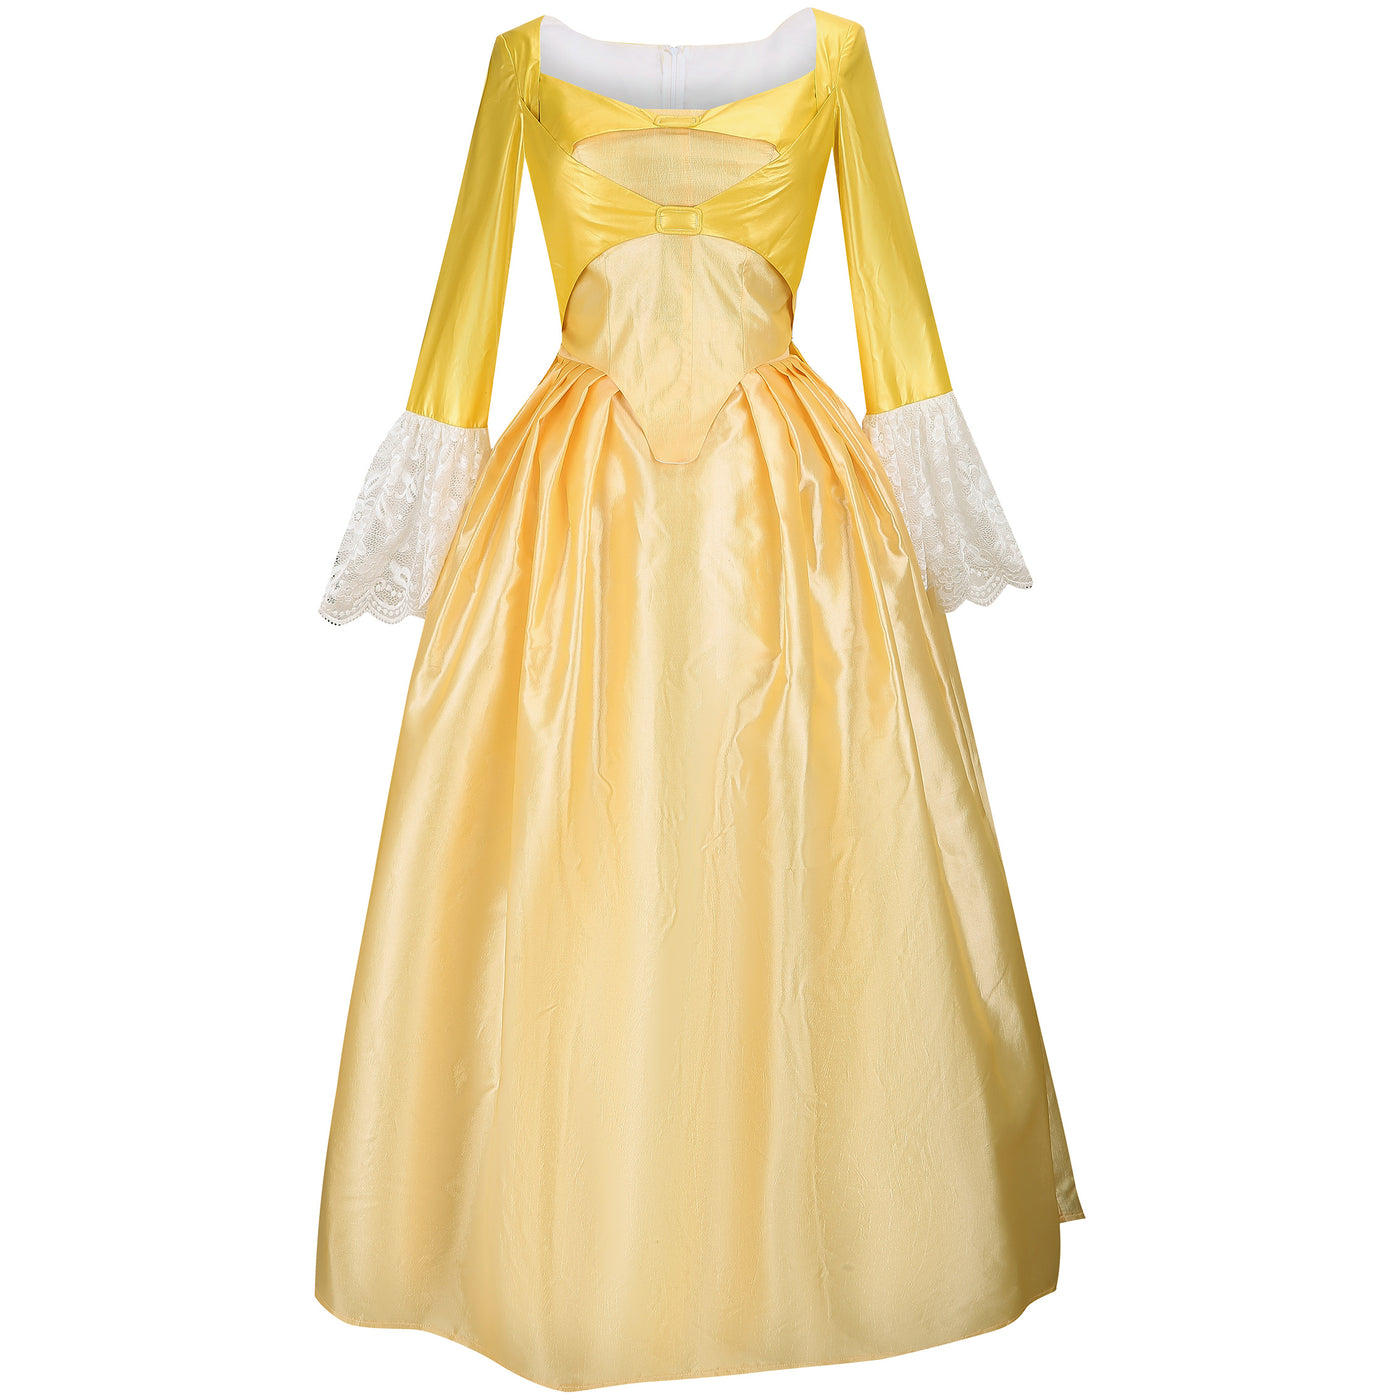 Cosplayflying - Buy Hamilton Musical Peggy Light Yellow Stage Dress ...